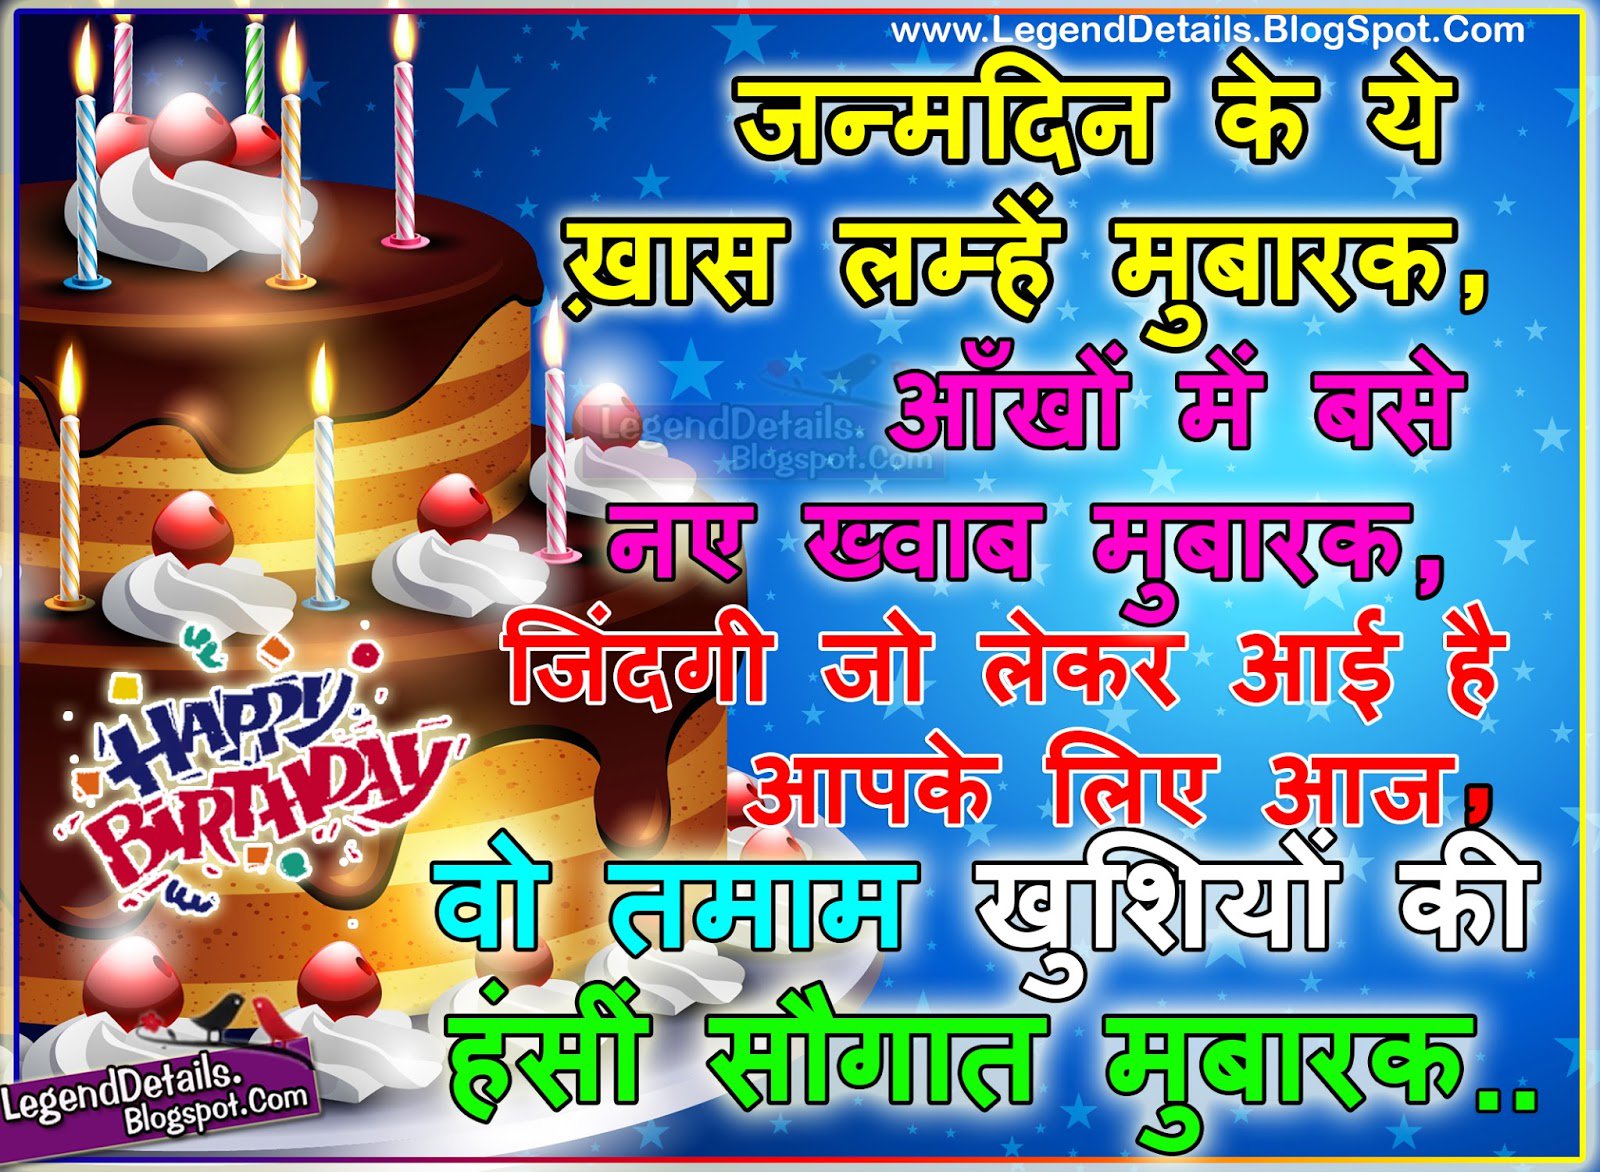     ---Happy Brihday Amitabh bachchan ji i wish u birthday------- 